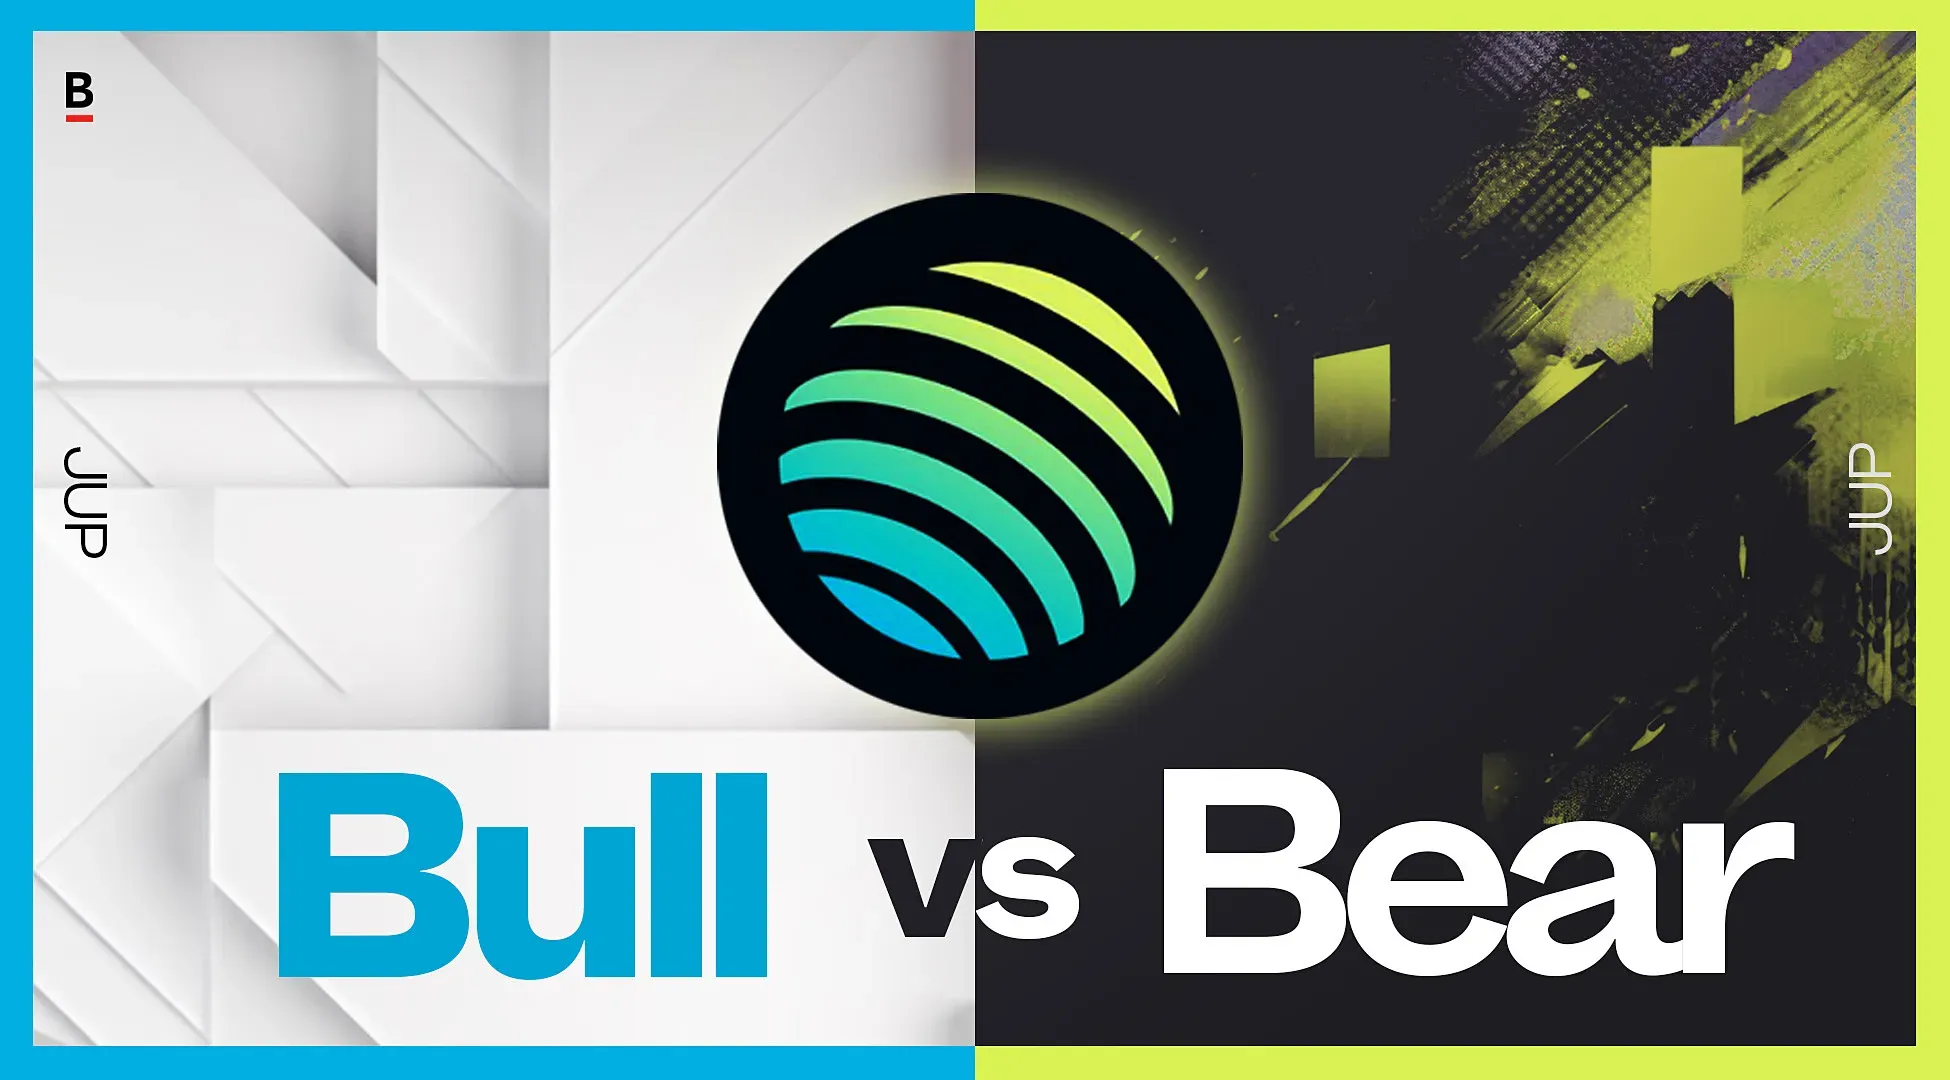 Bull vs Bear: JUP